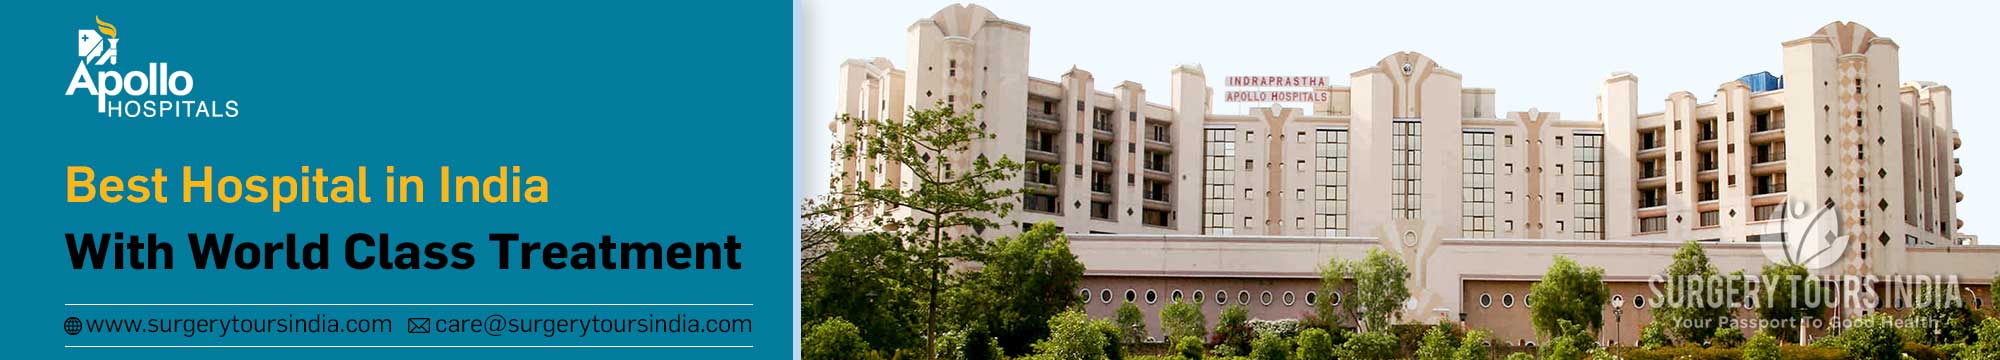 Indraprastha Apollo Hospital in Delhi